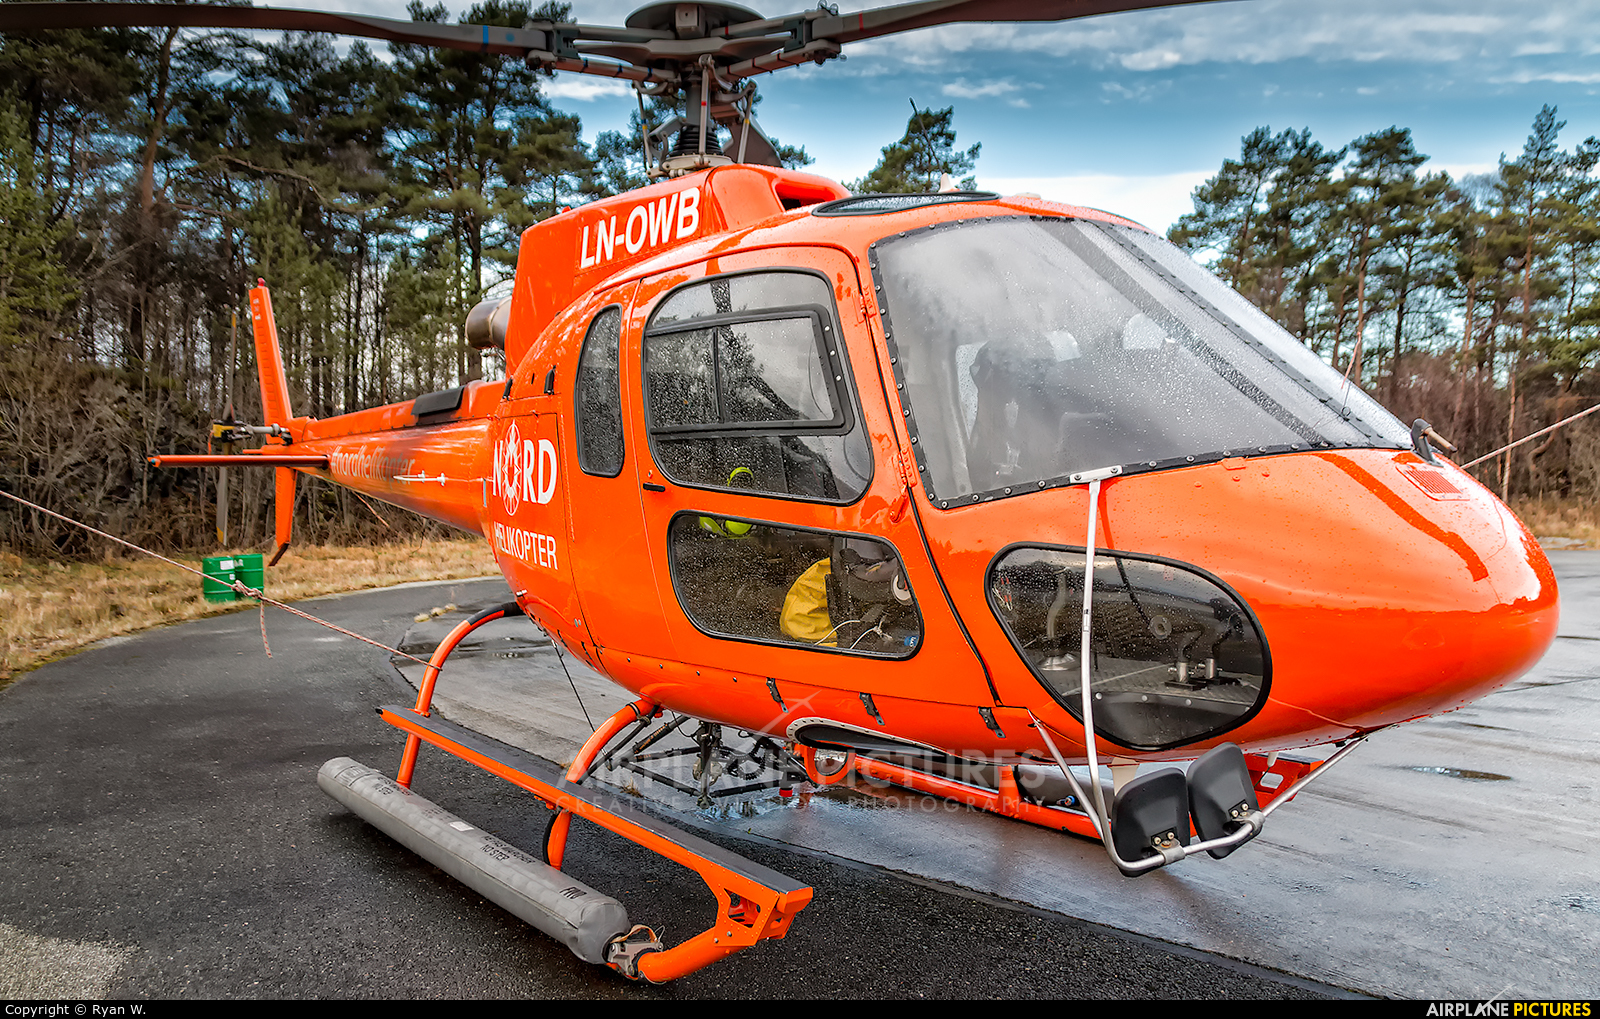 Nord Helikopter AS LN-OWB aircraft at Bergen - Flesland